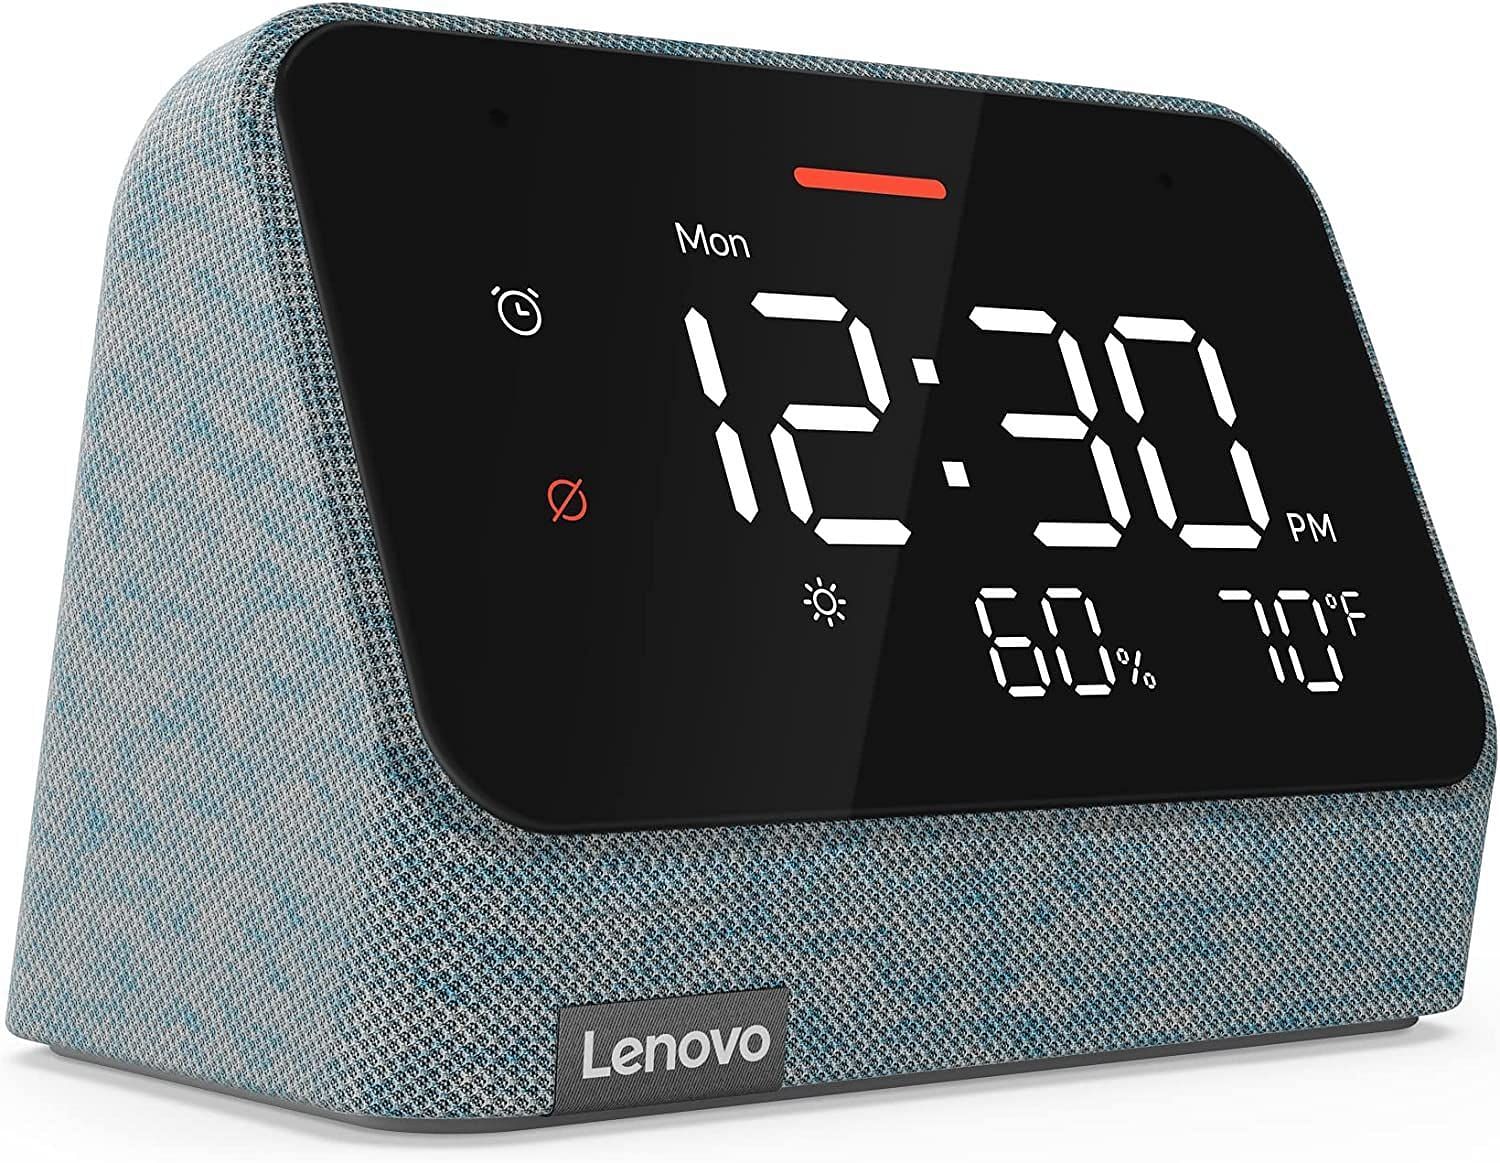 The Lenovo Smart Clock (Image via Amazon)